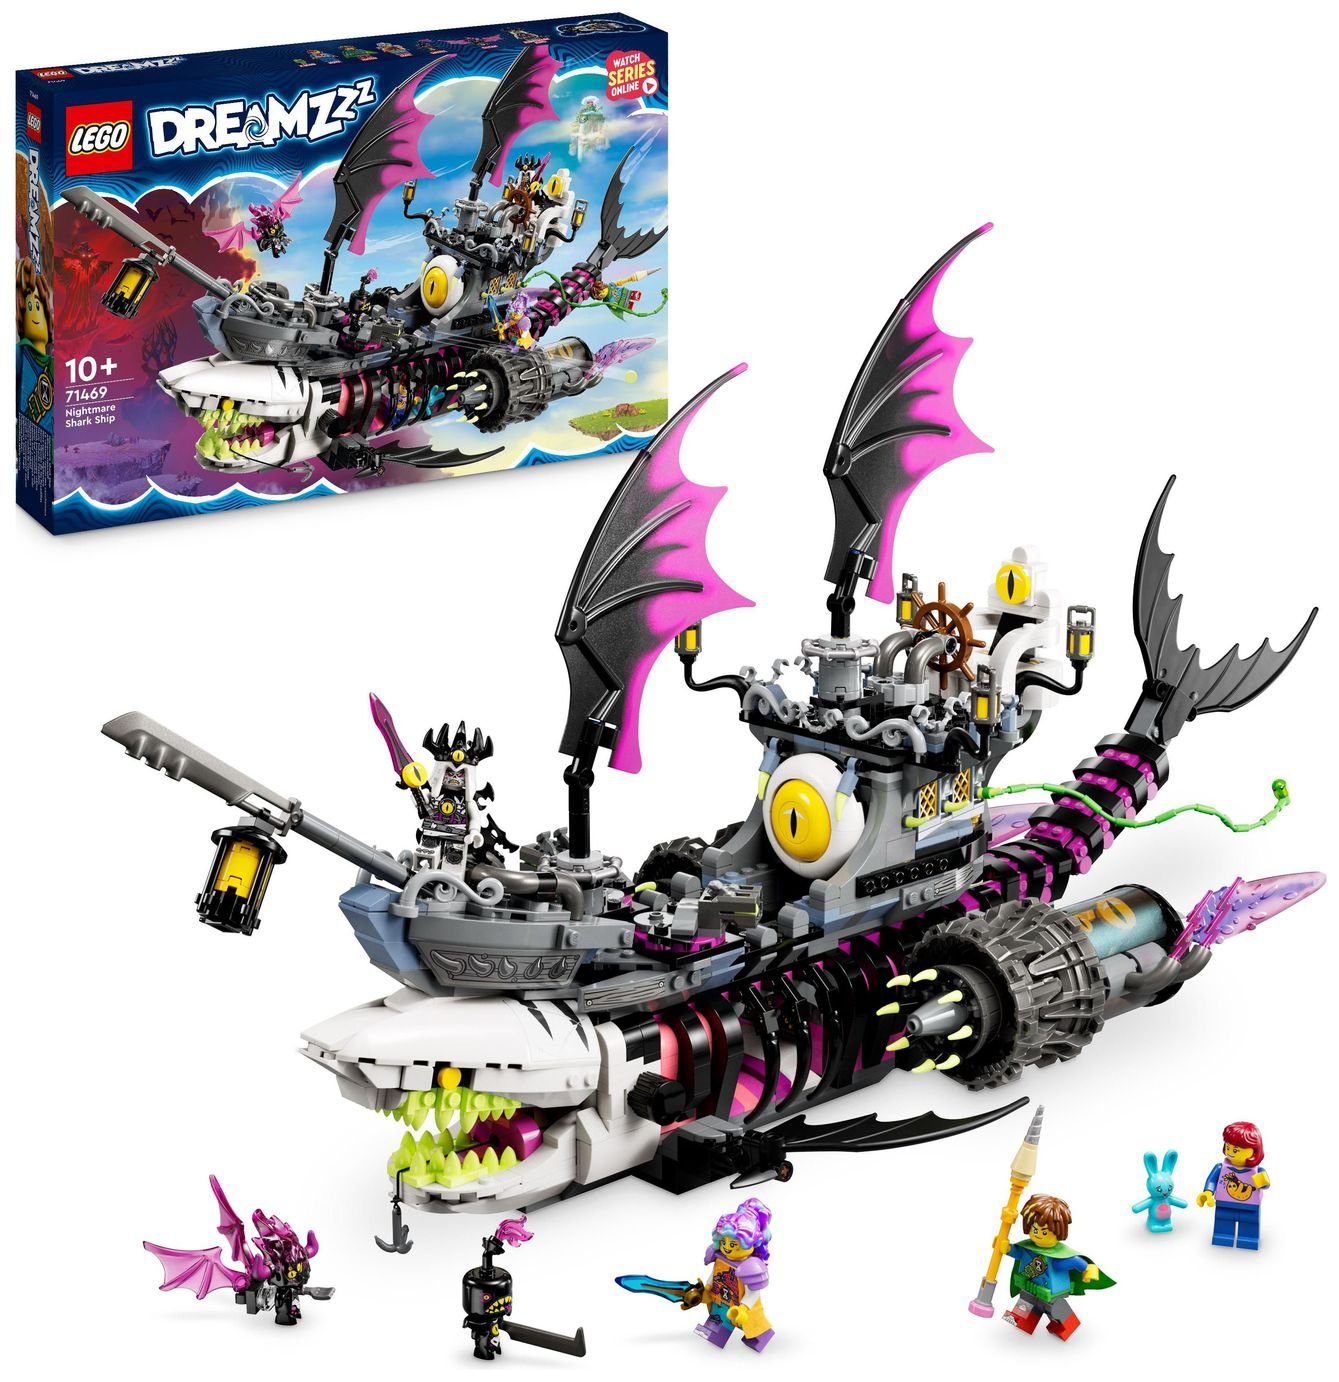 LEGO DREAMZzz Nightmare Shark Ship Pirate Ship Toy 71469